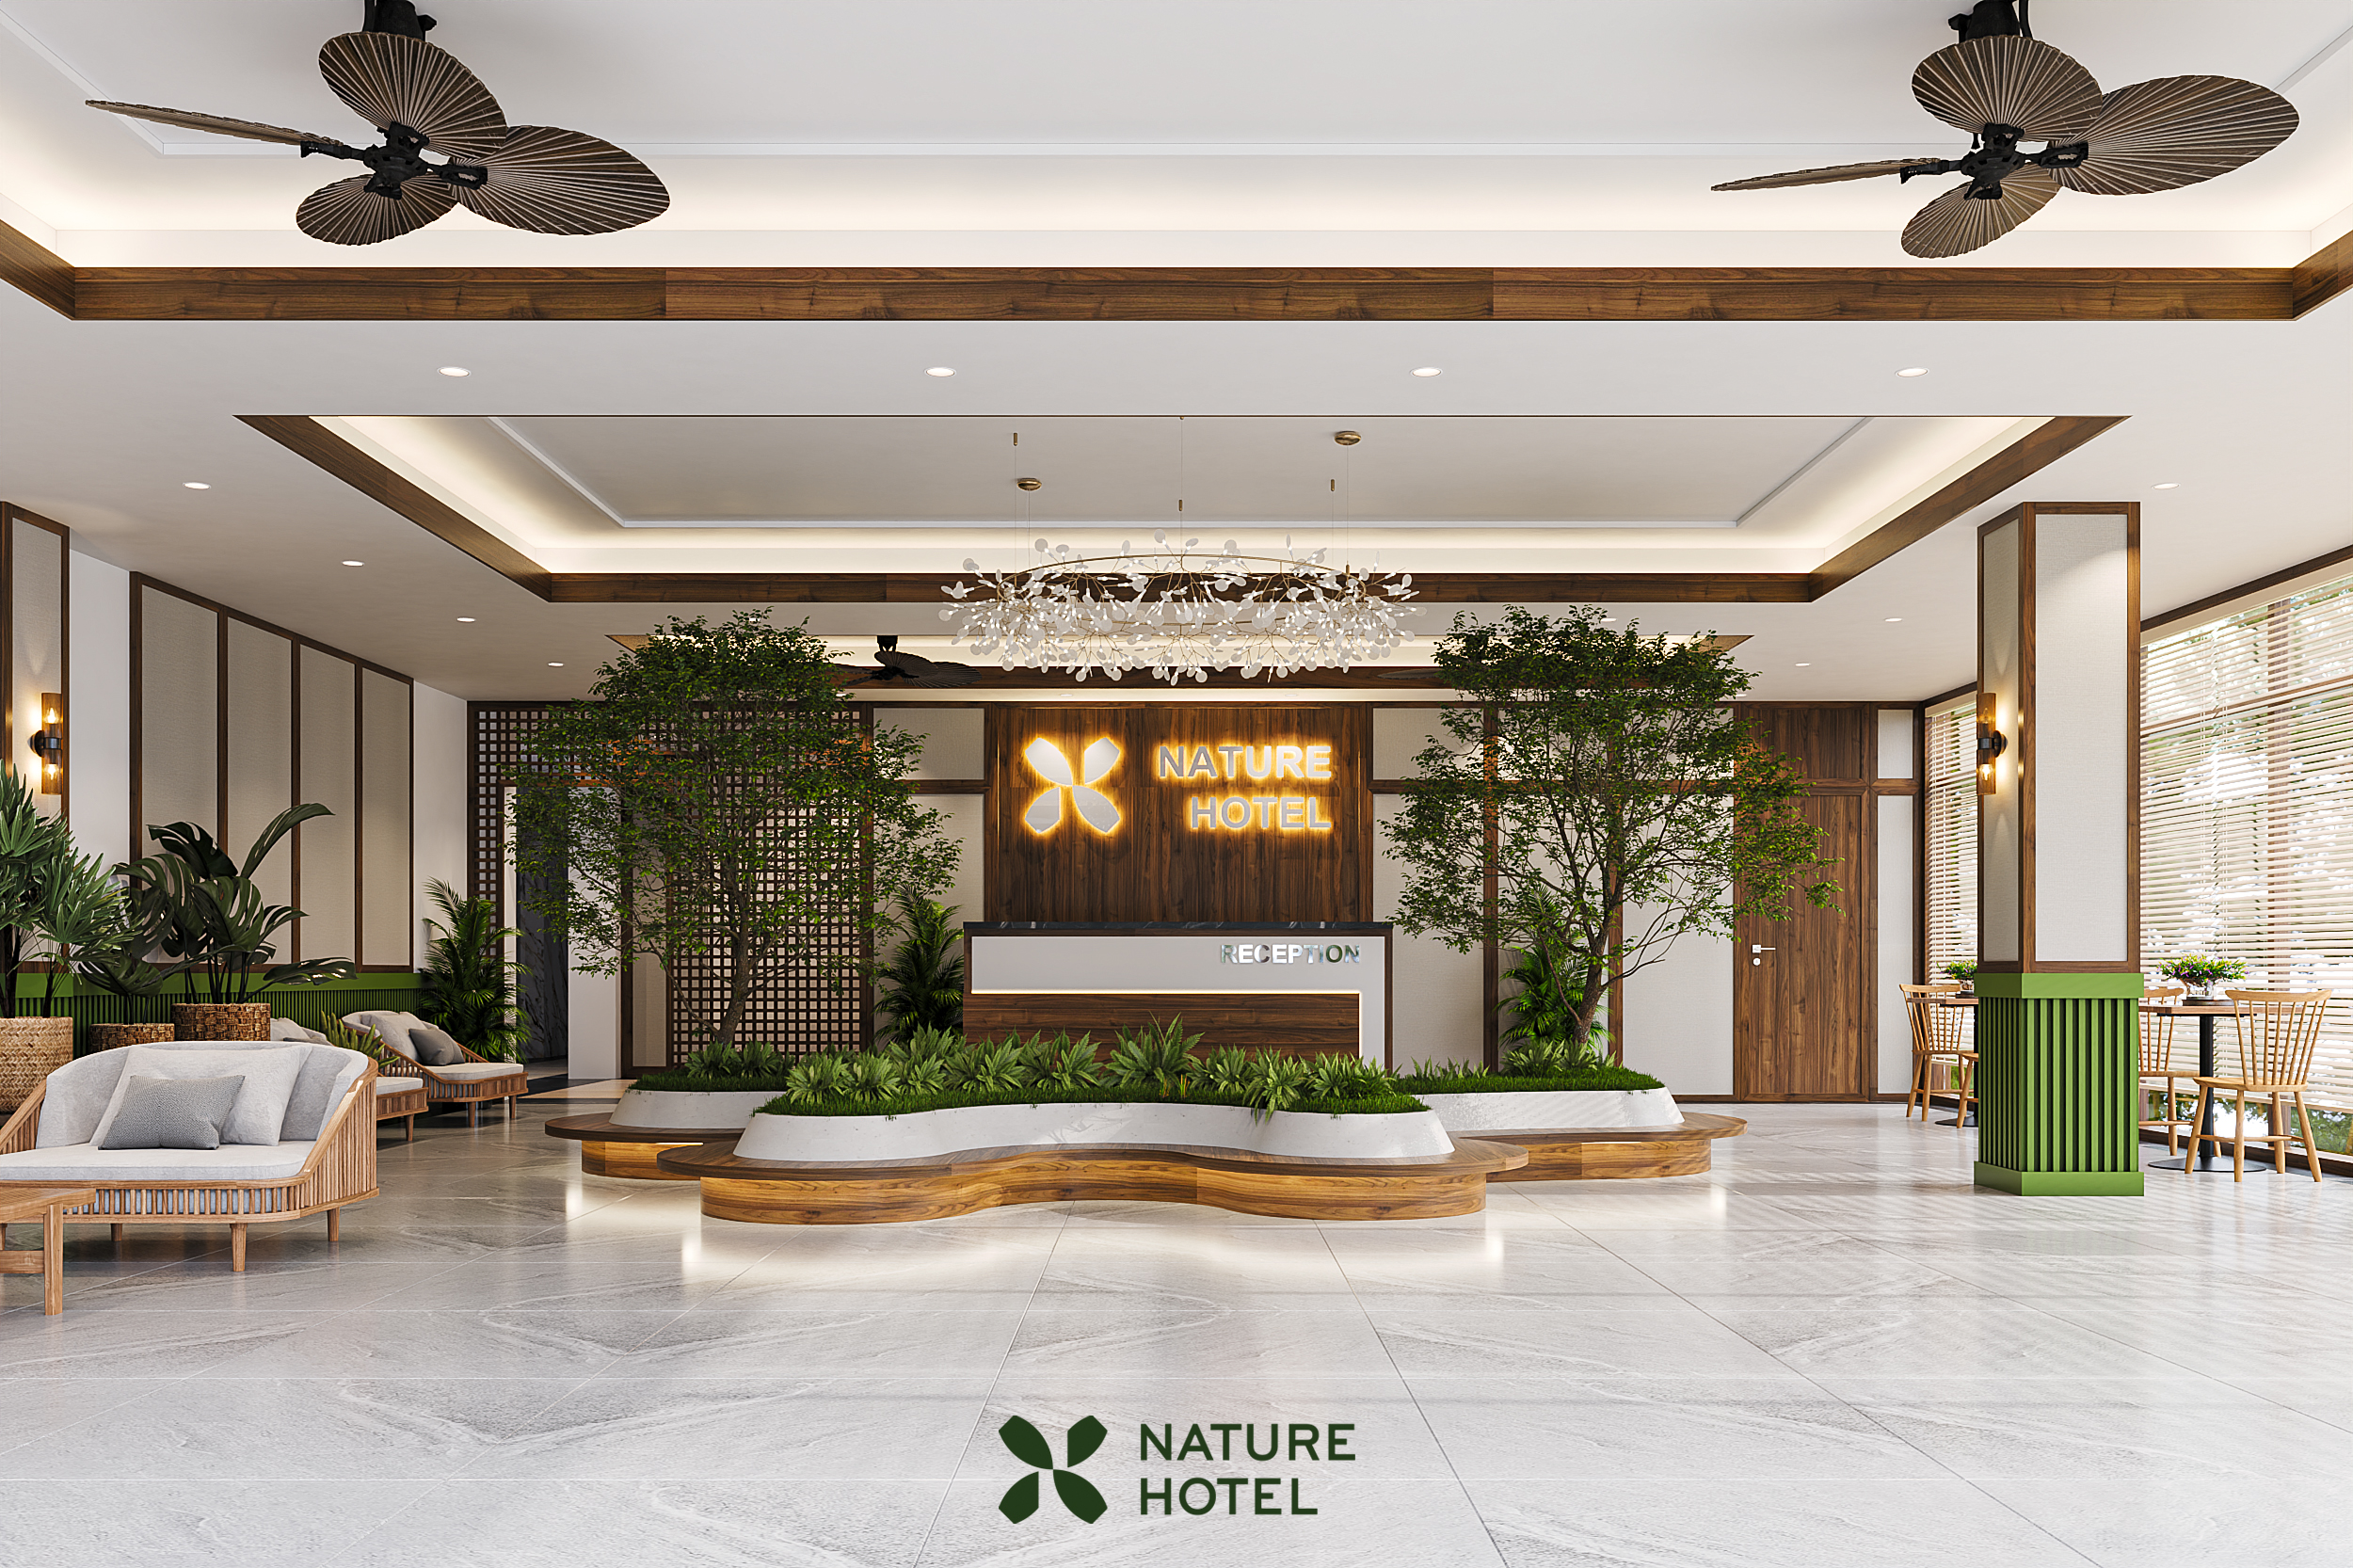 About Nature Hotel - Le Hong Phong